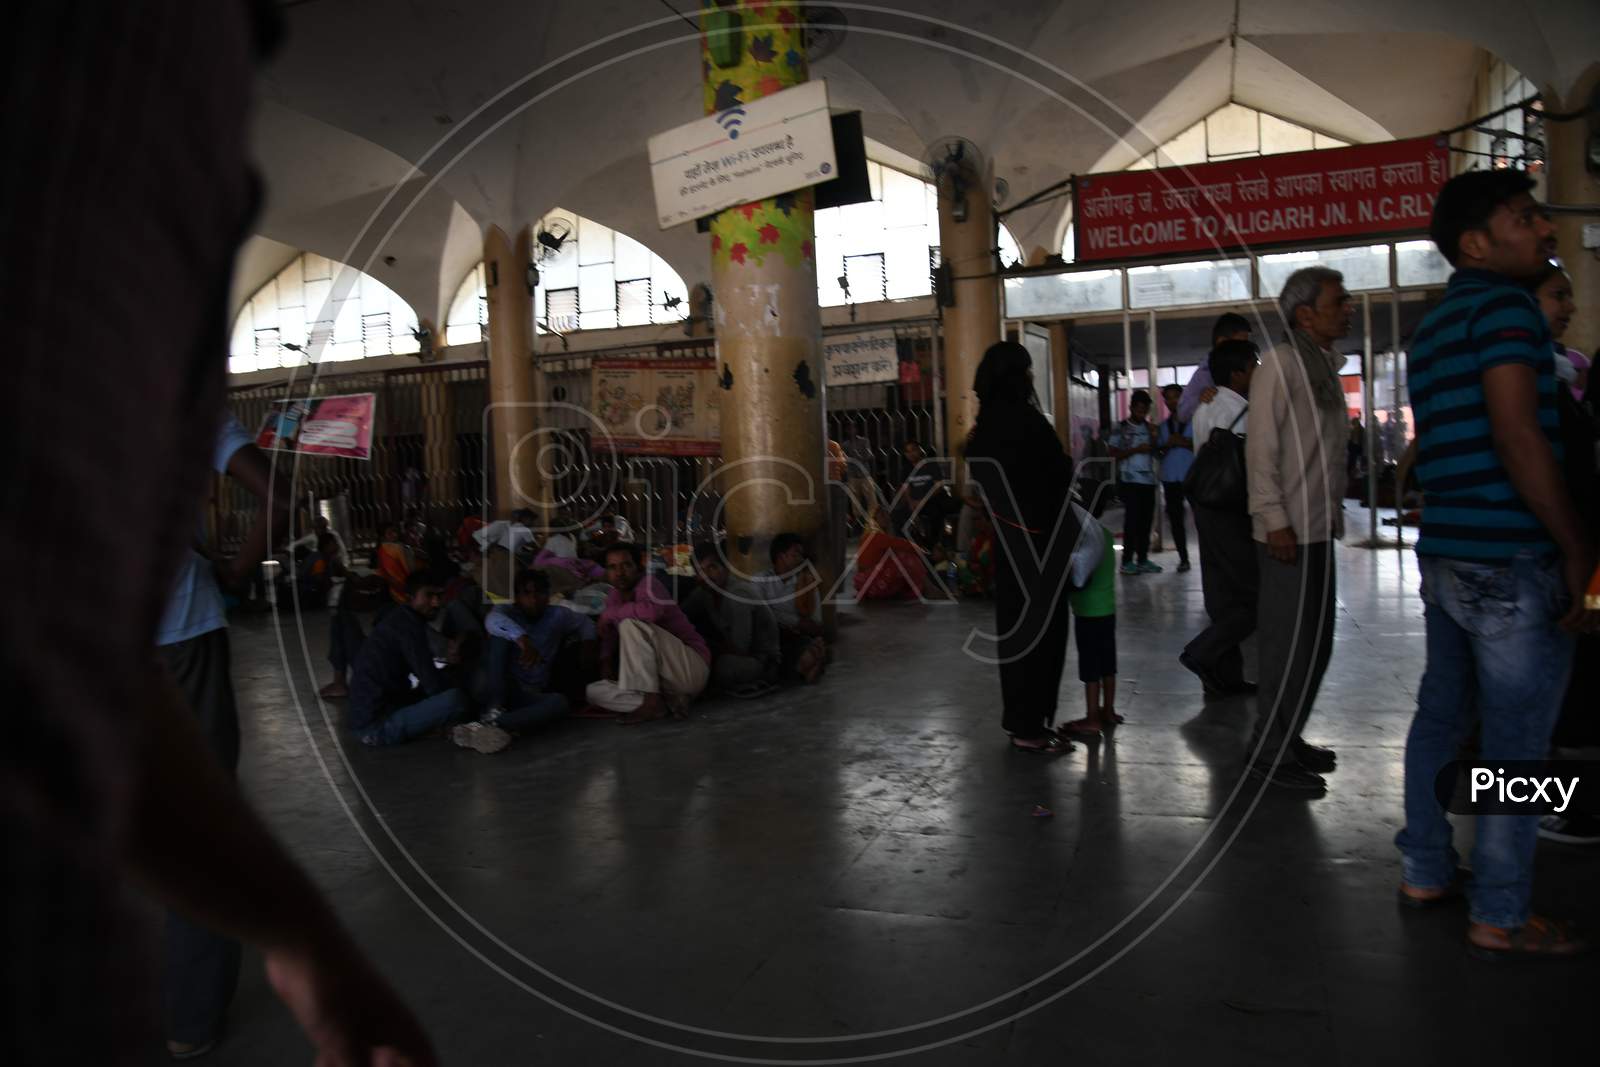 Passengers Waiting On an Railway Station Platform